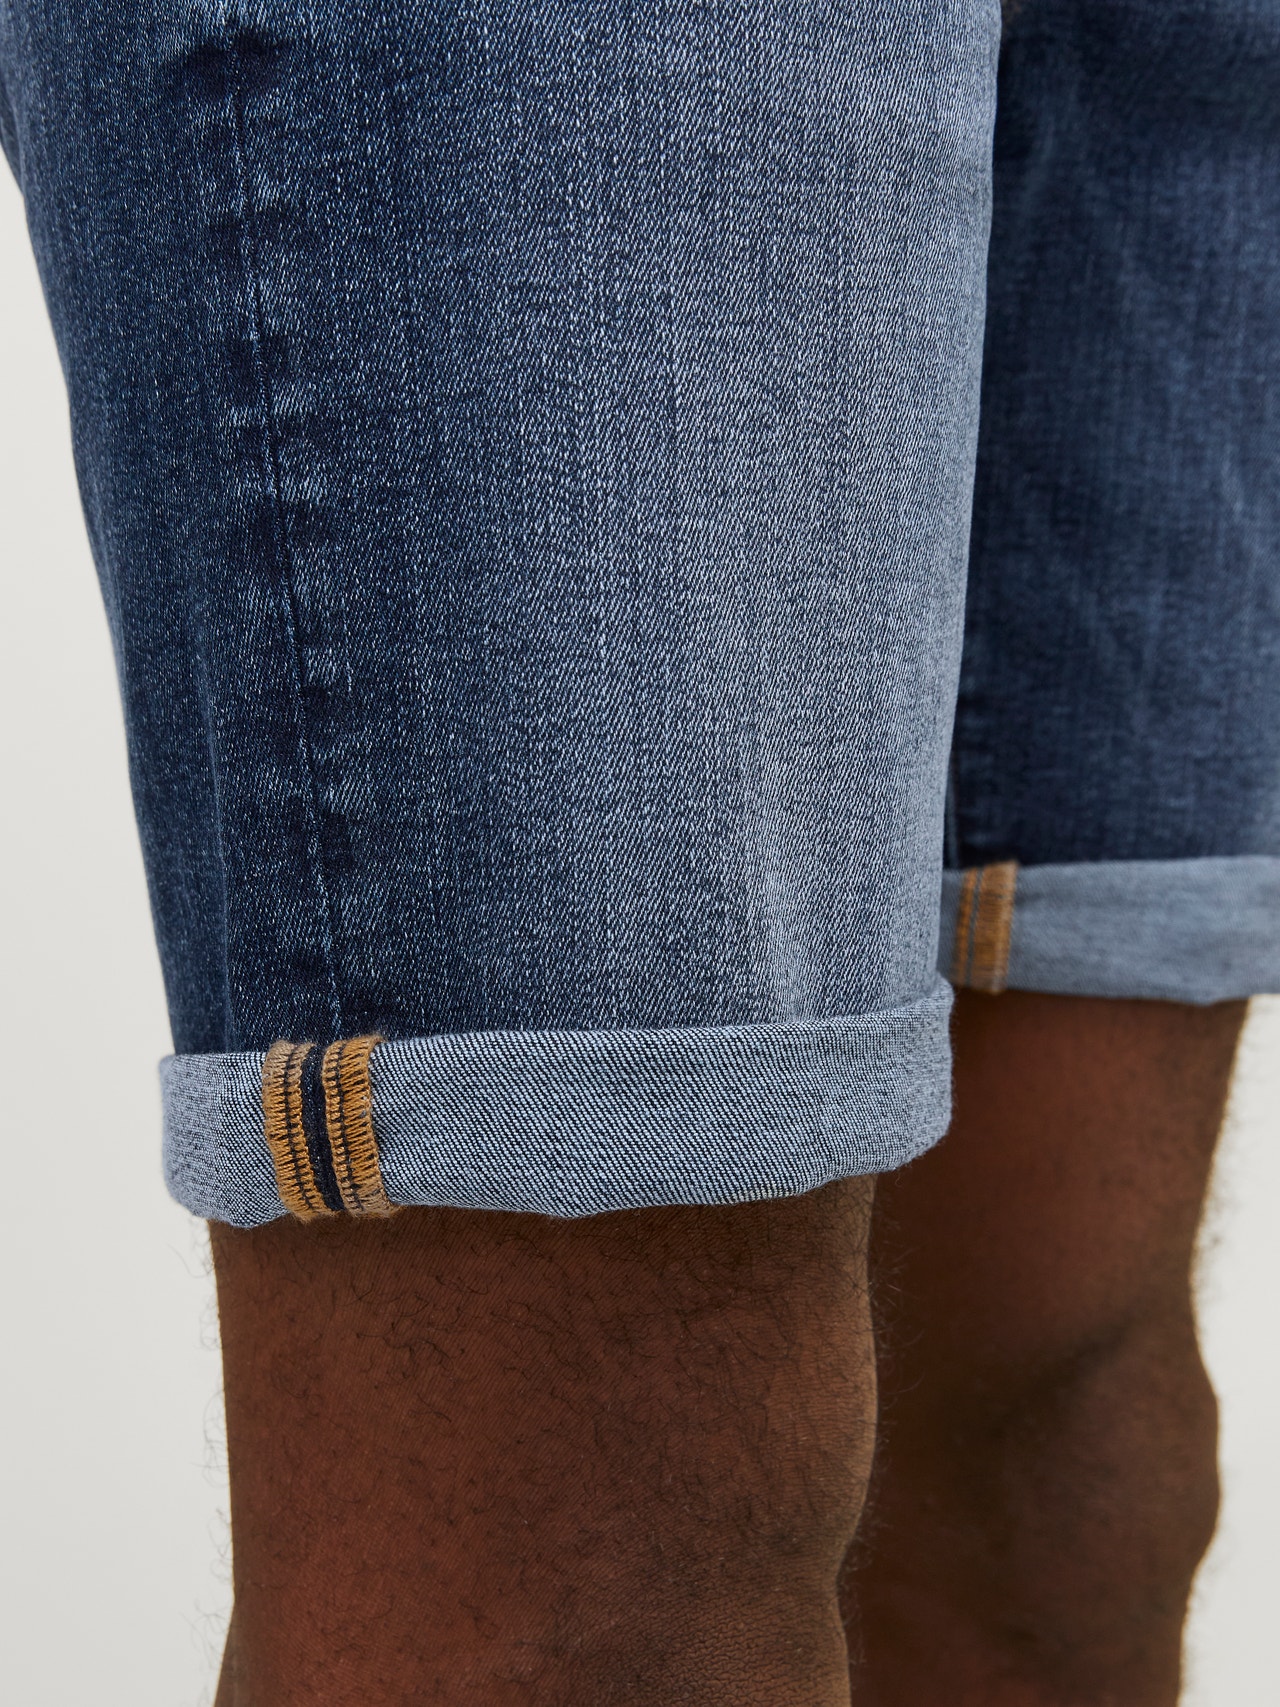 Jack & Jones Regular Fit Jeans Shorts -Blue Denim - 12250489